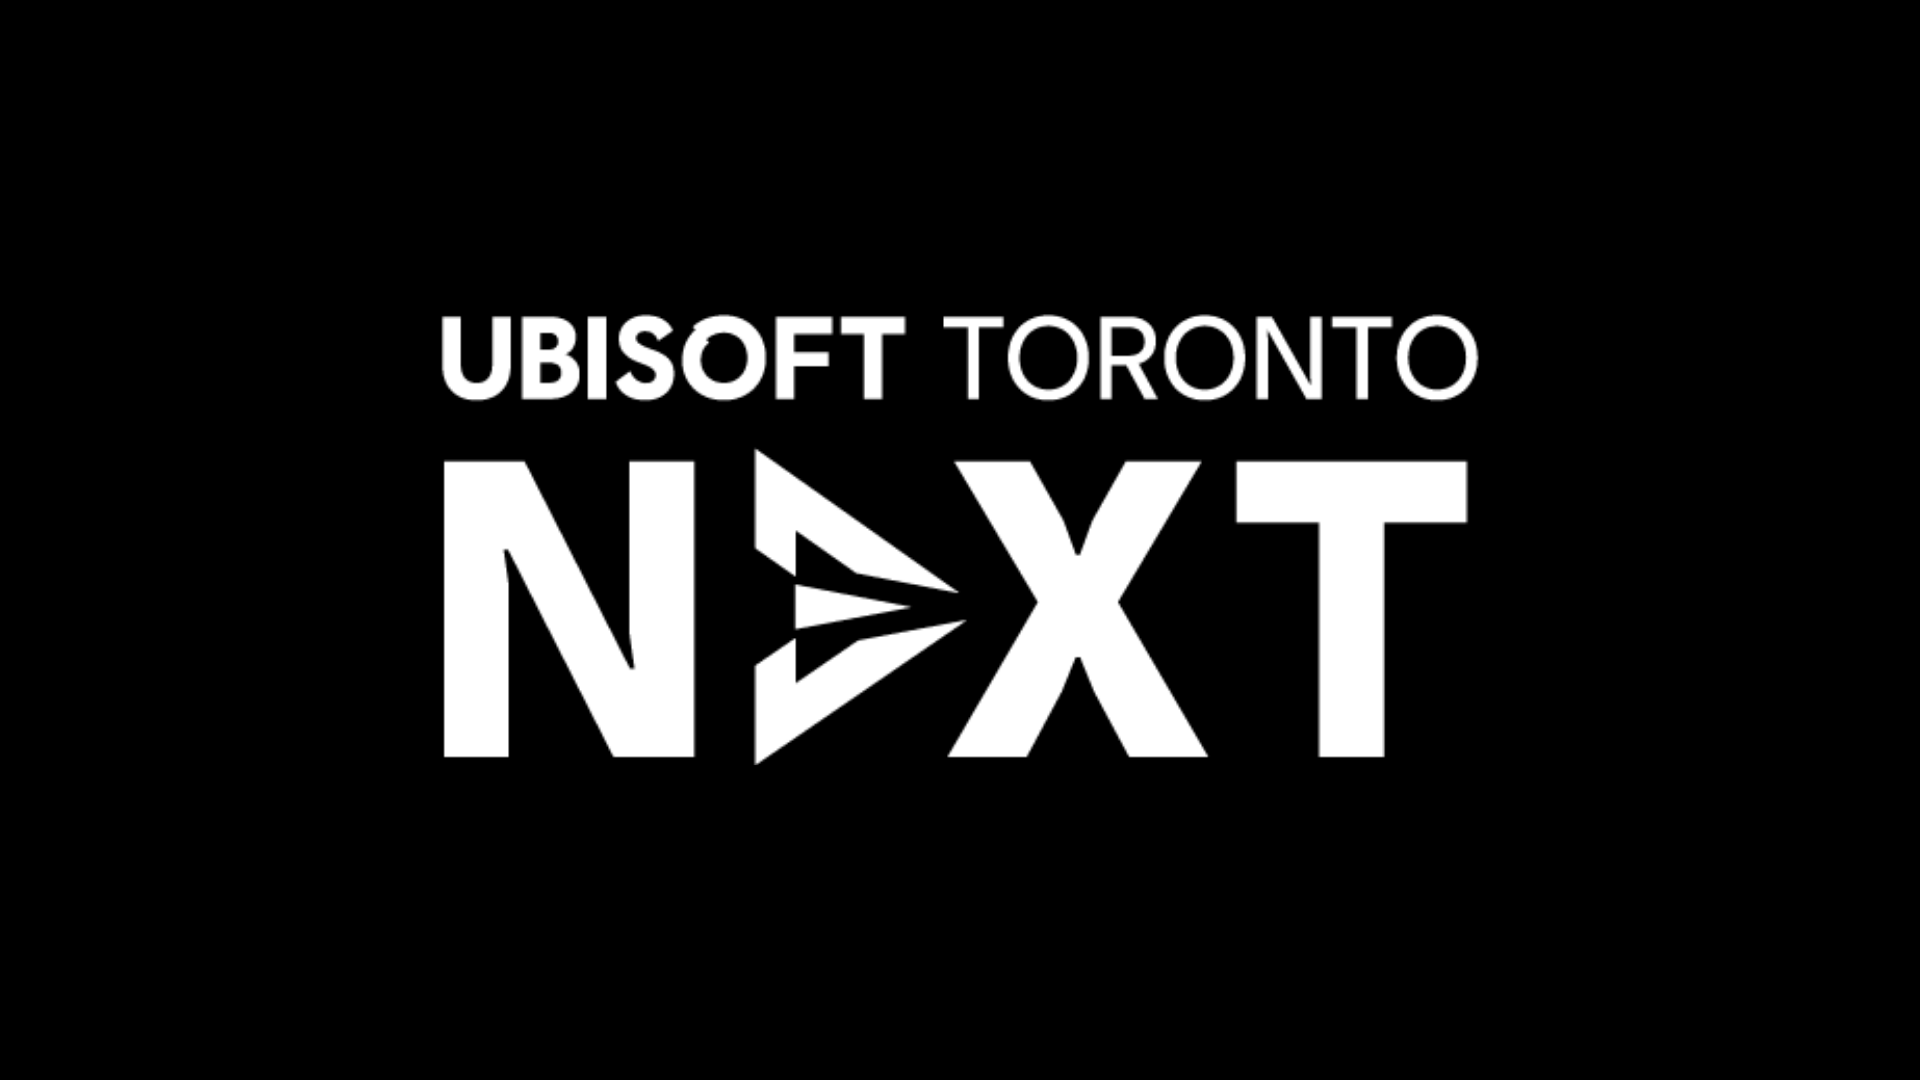 Ubisoft Toronto NEXT